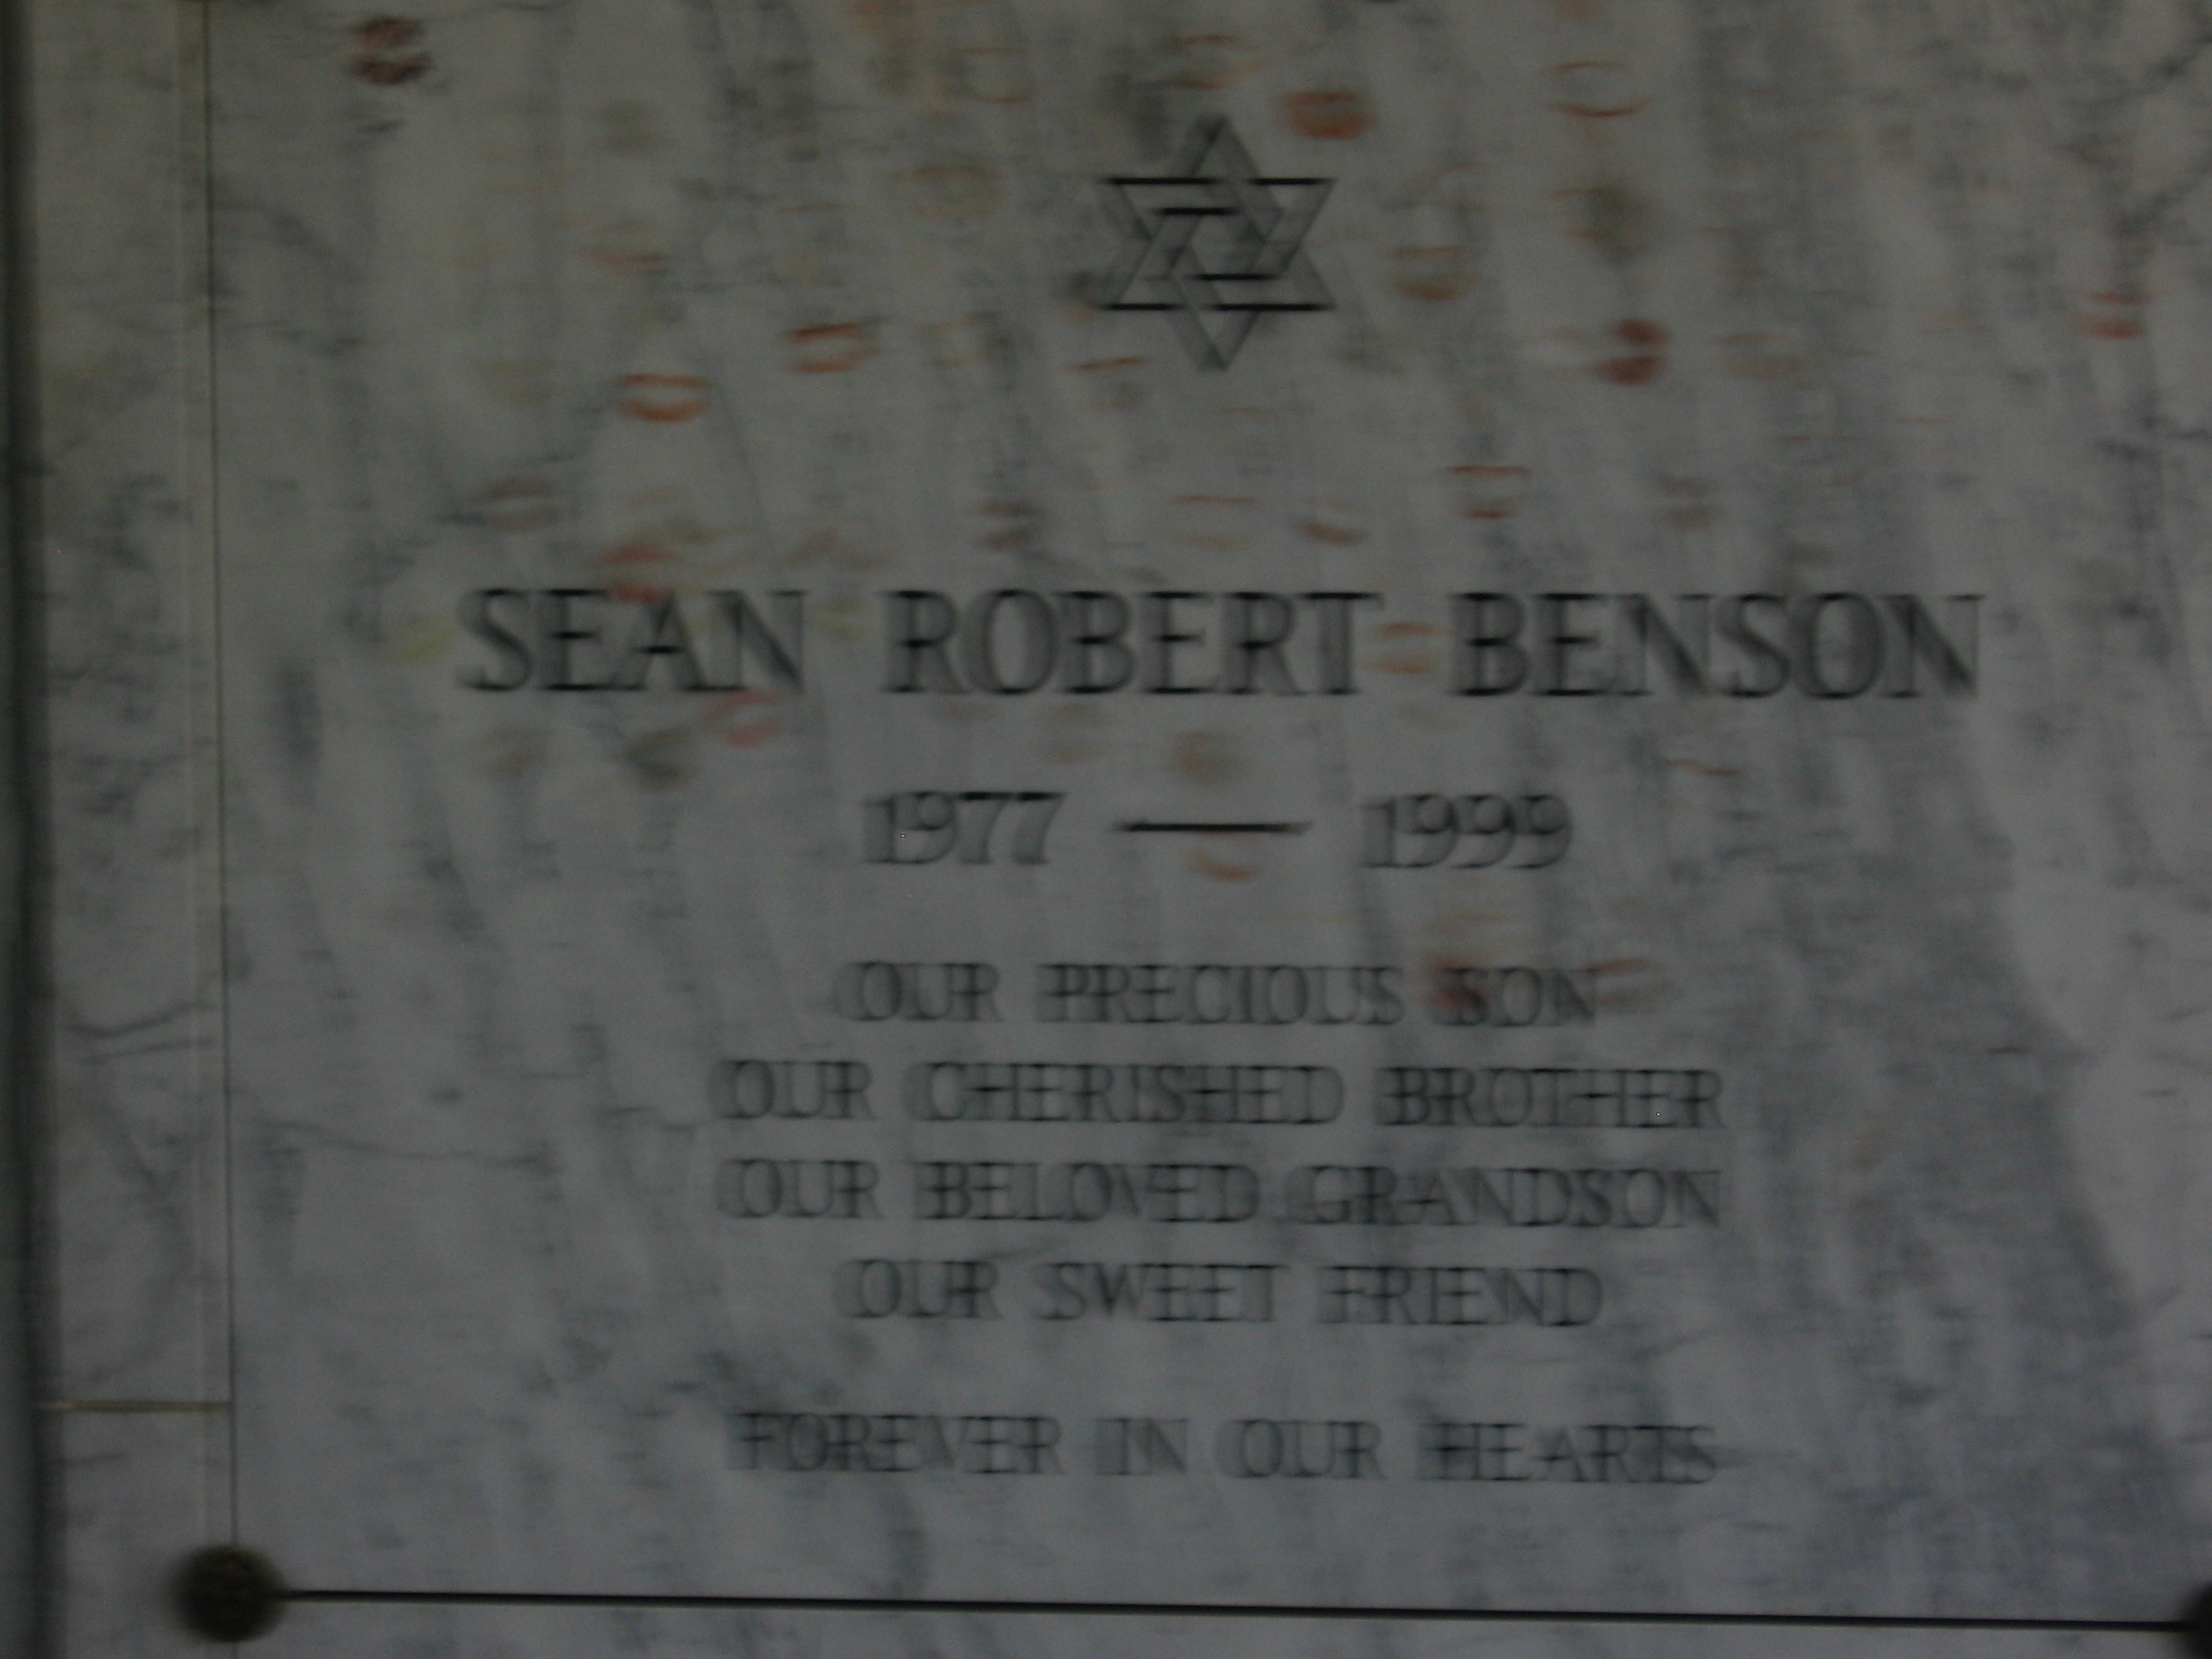 Sean Robert Benson